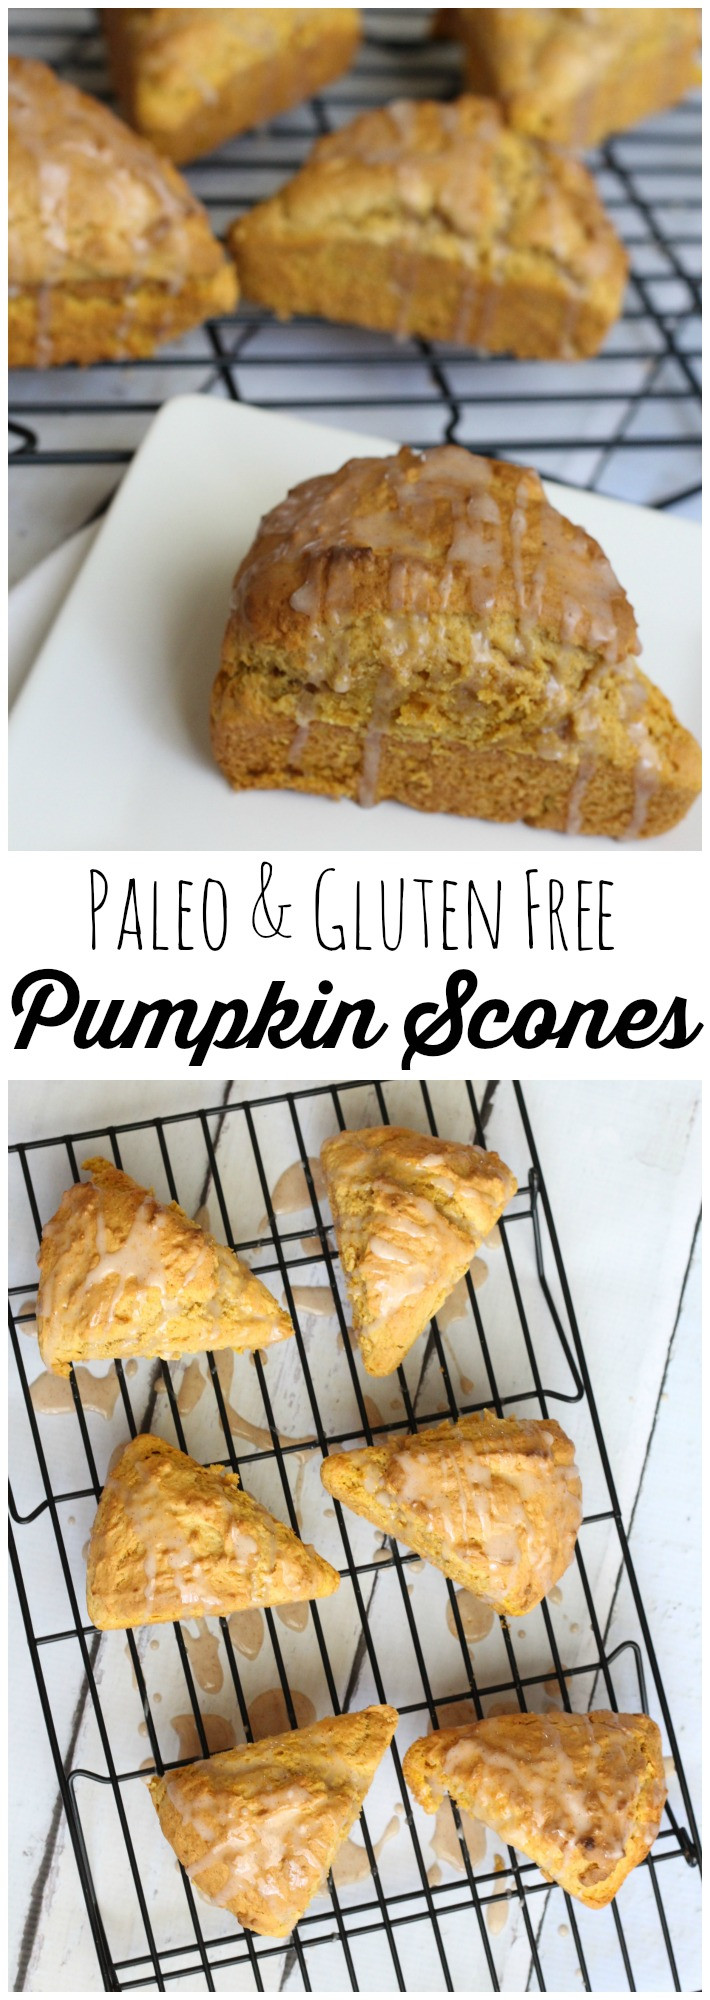 Paleo Pumpkin Recipes
 Paleo Gluten Free & Original Pumpkin Scone Recipes